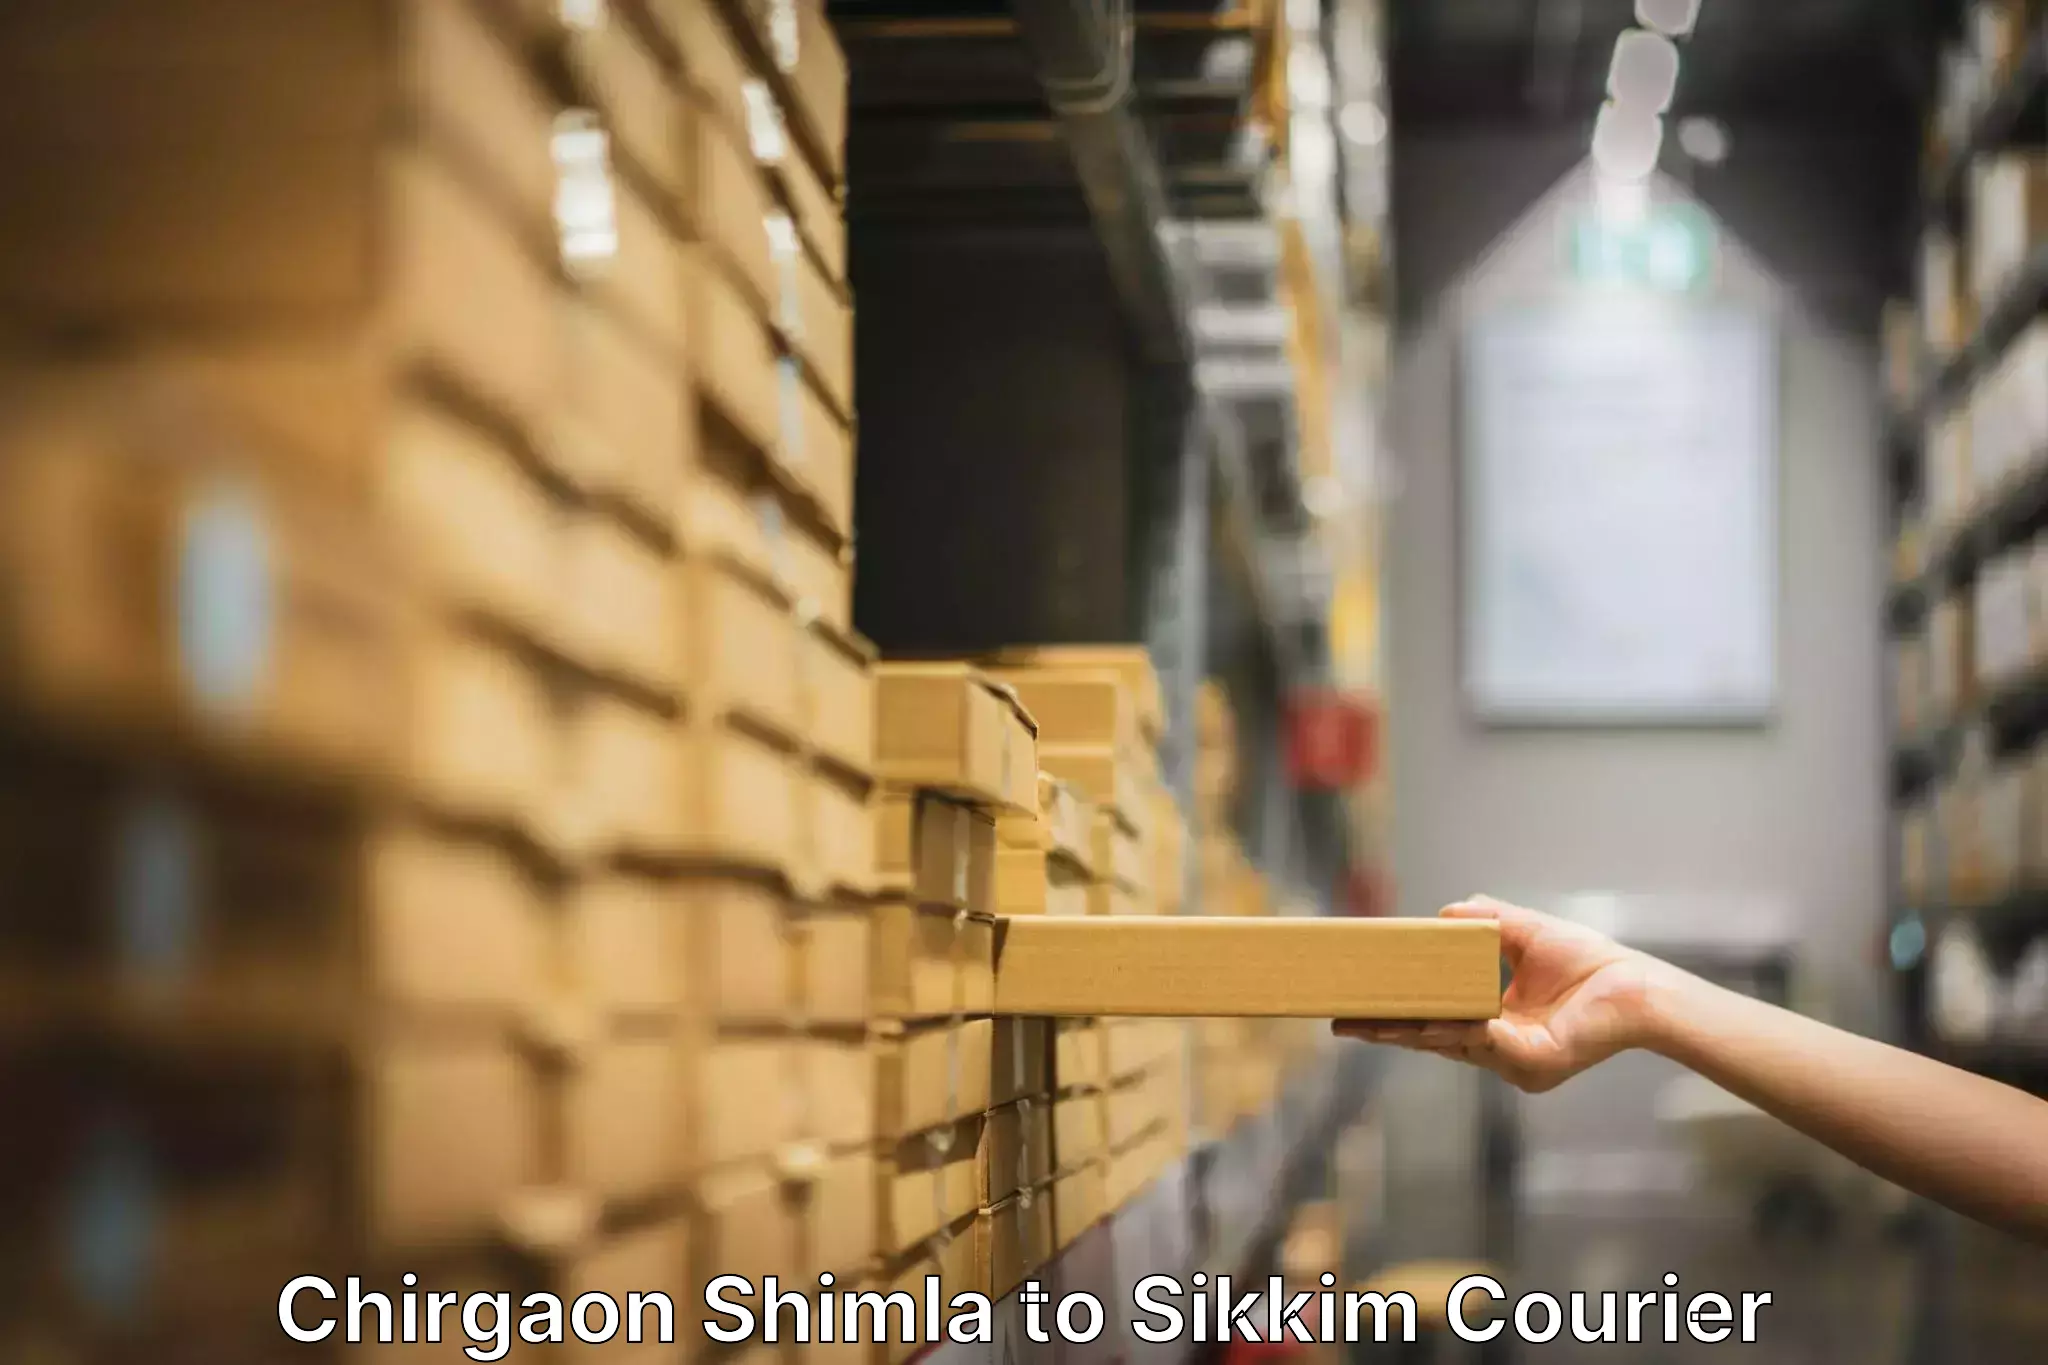 Professional moving company Chirgaon Shimla to Pelling